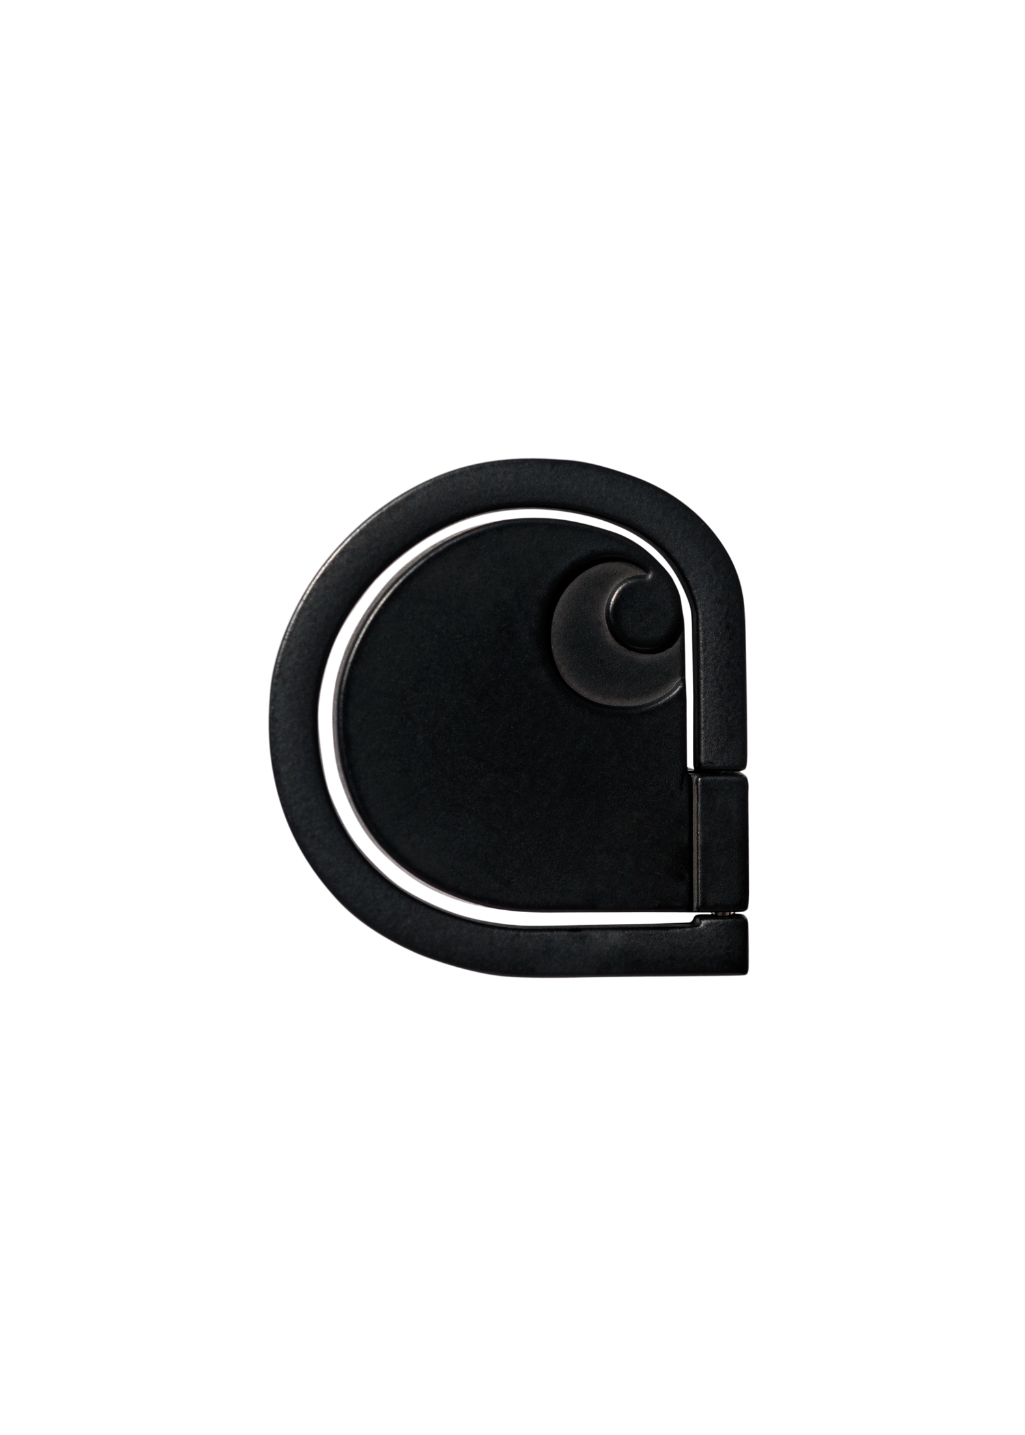 Carhartt WIP - C Logo Phone Ring - Black - Hardpressed Print Studio Inc.